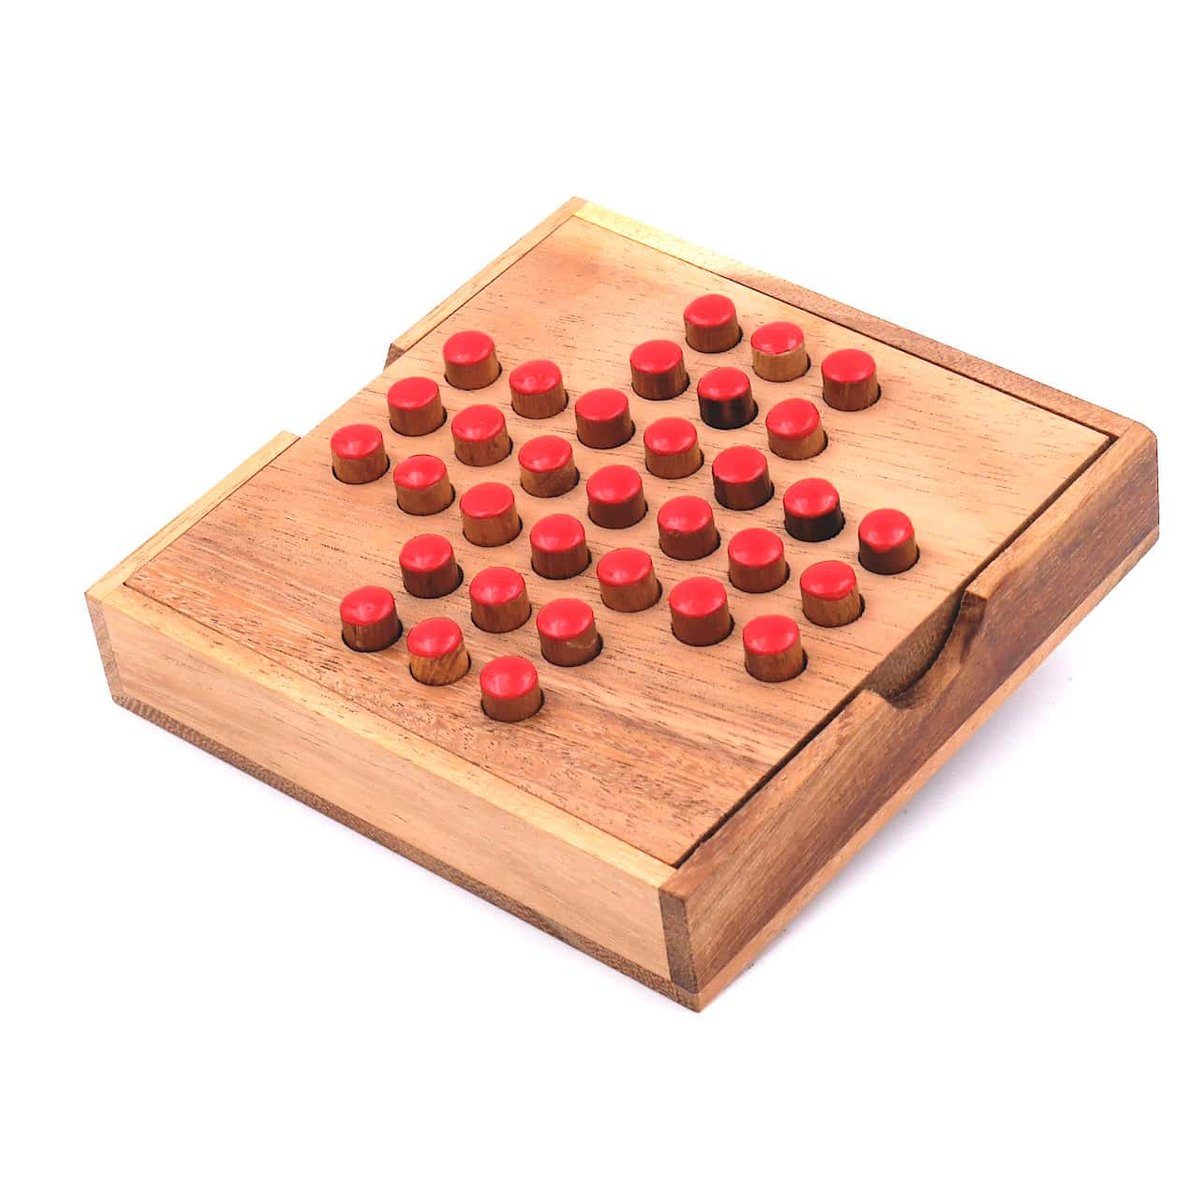 ROMBOL Denkspiele Spiel, Steckspiel Solitaire - unterhaltsamer Klassiker aus edlem Holz, Holzspiel rot